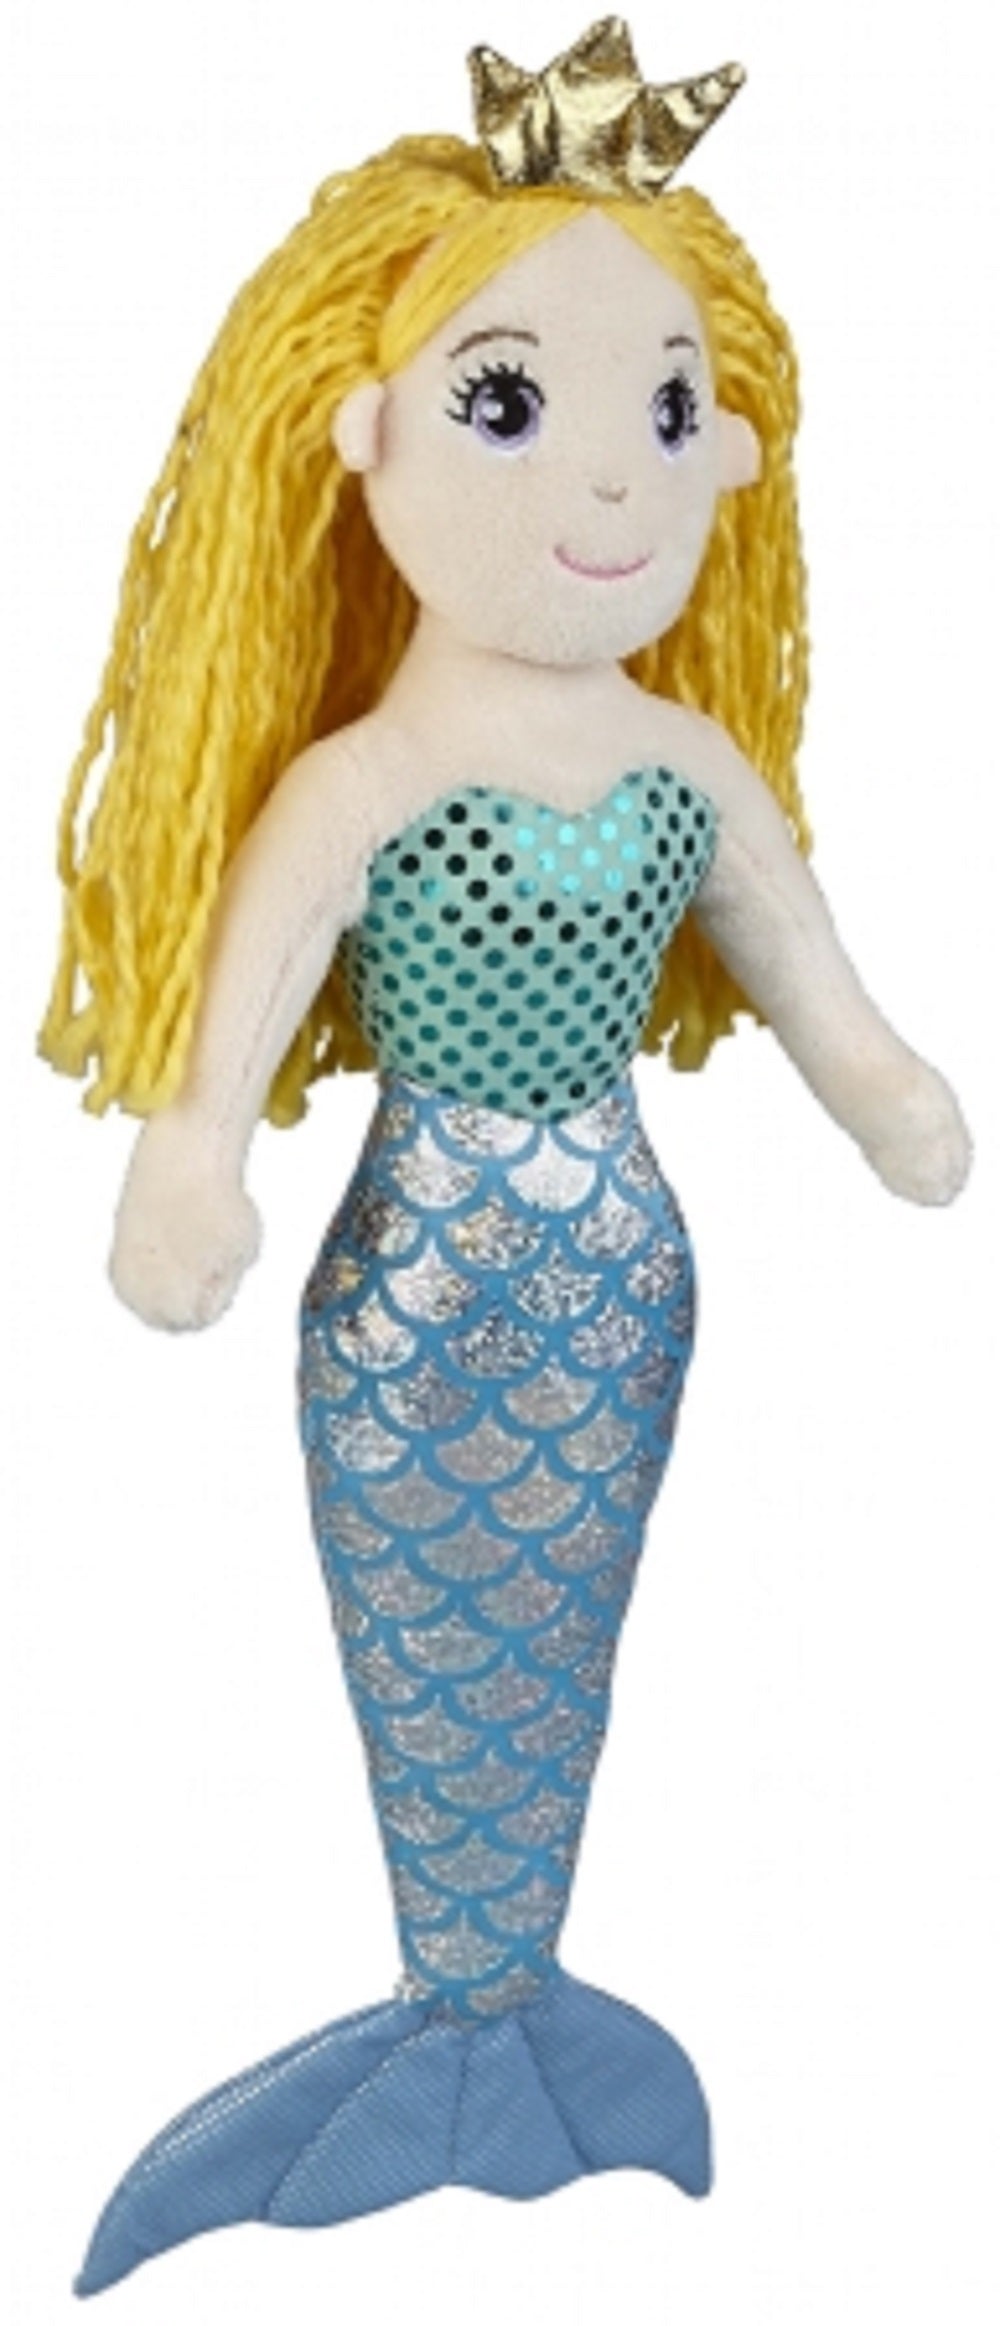 Ravensden Soft Toy Mermaid 39cm